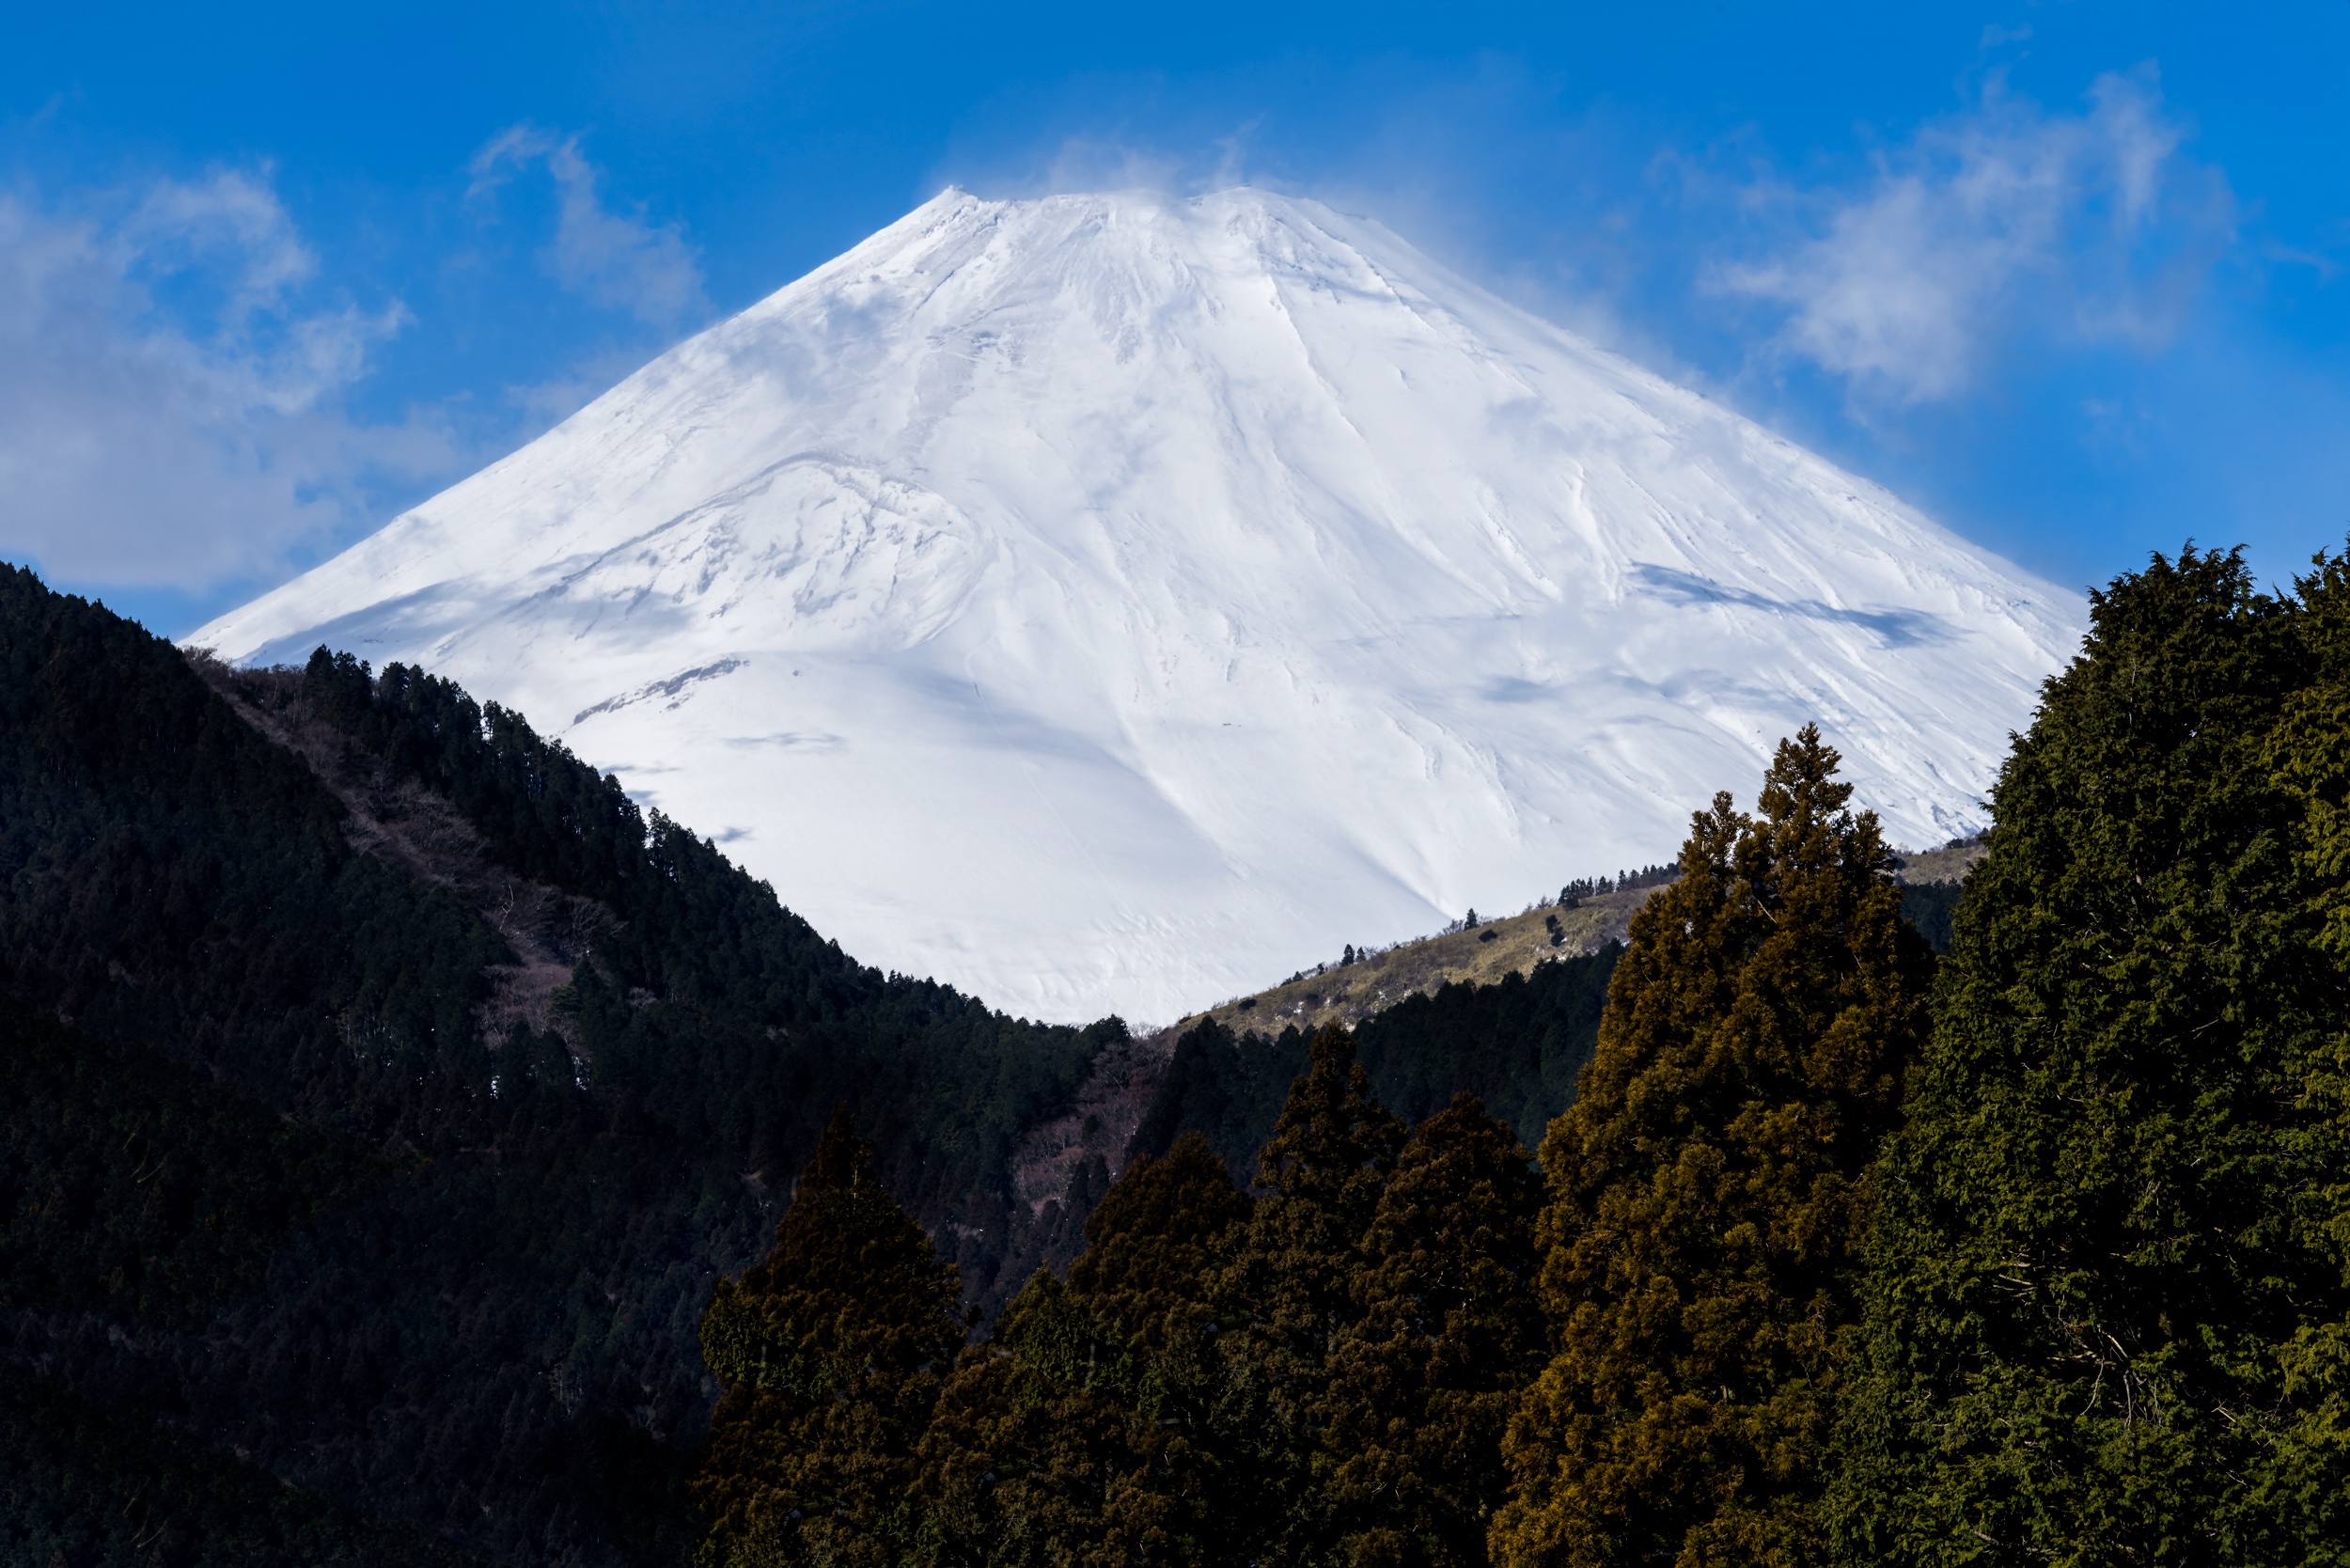 Feb 310, 2019 Mt. Fuji Snow Monkey & Landscape Blain Harasymiw